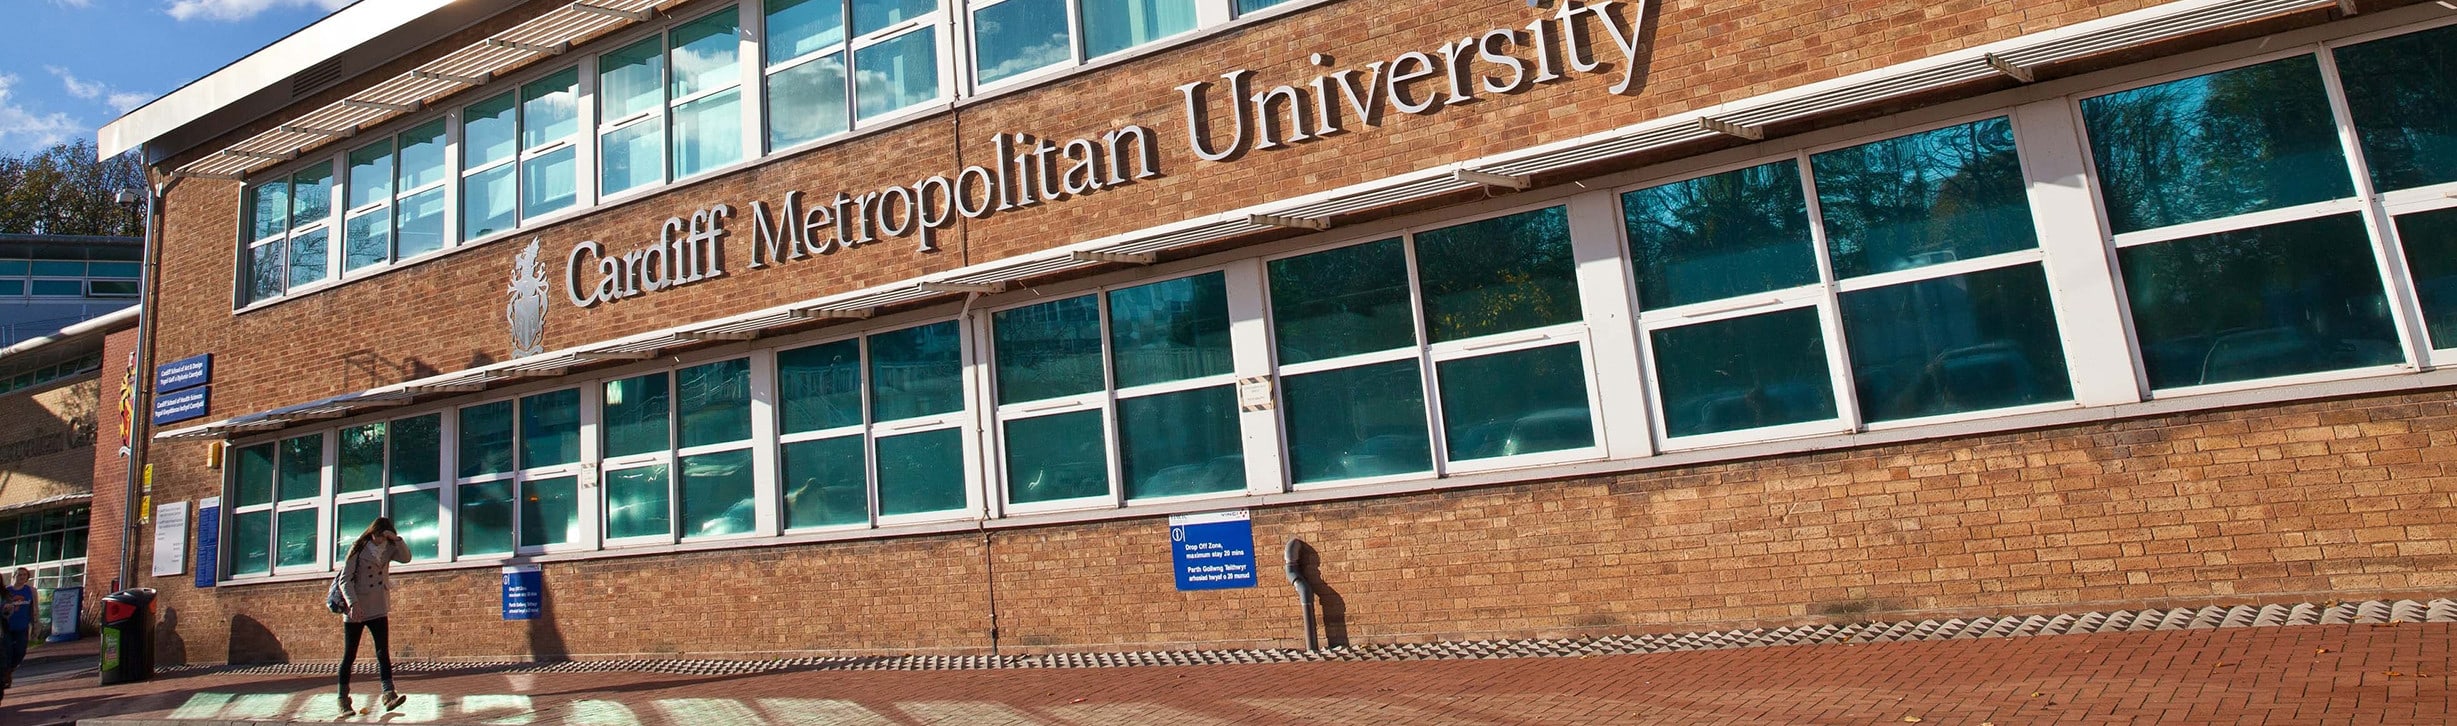 Cardiff Metropolitan University in United Kingdom - Master Degrees